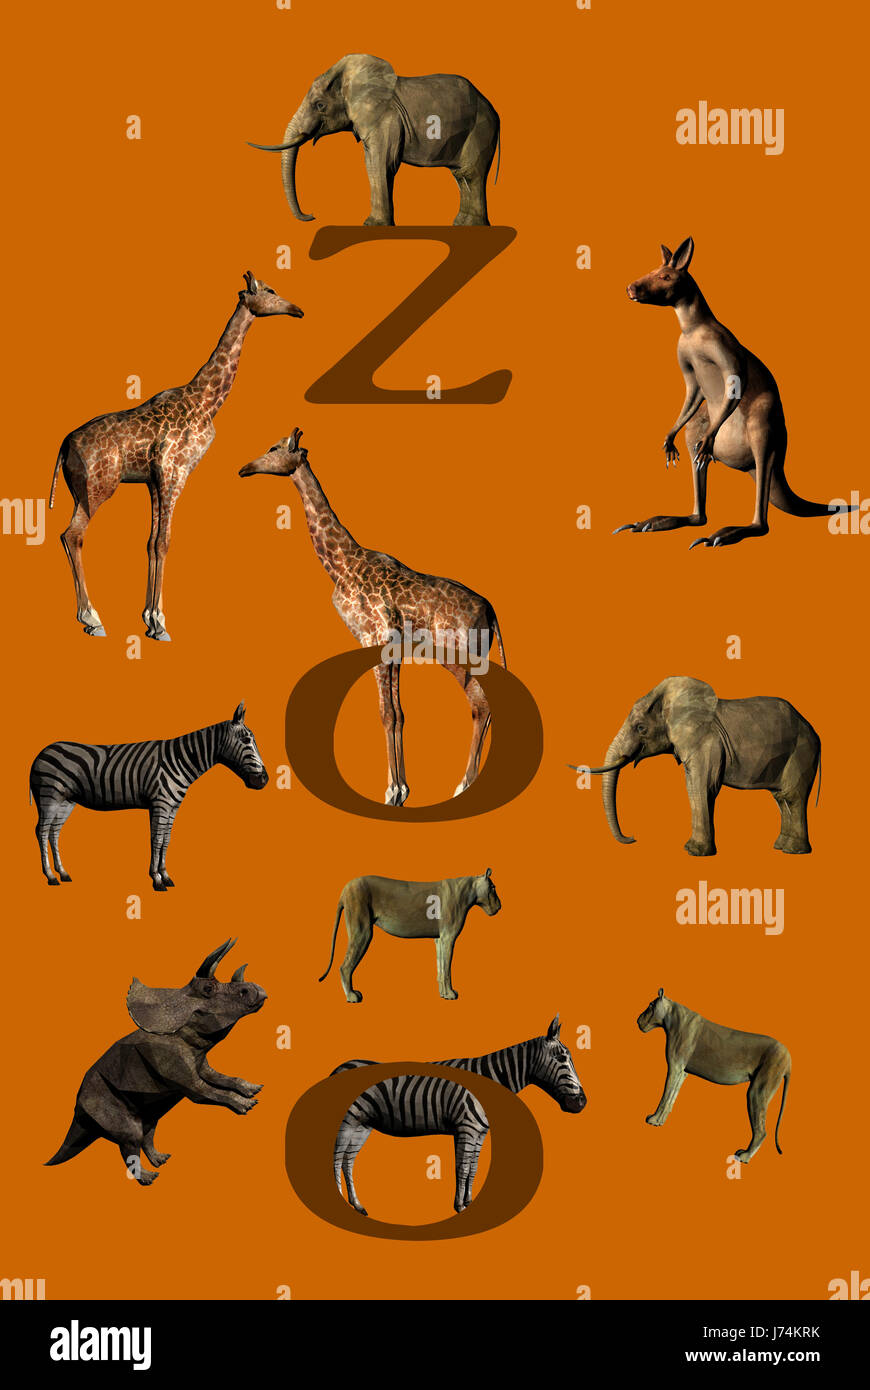 elephant animals zoo giraffe savage haggardly symbolic graphic brown brownish Stock Photo